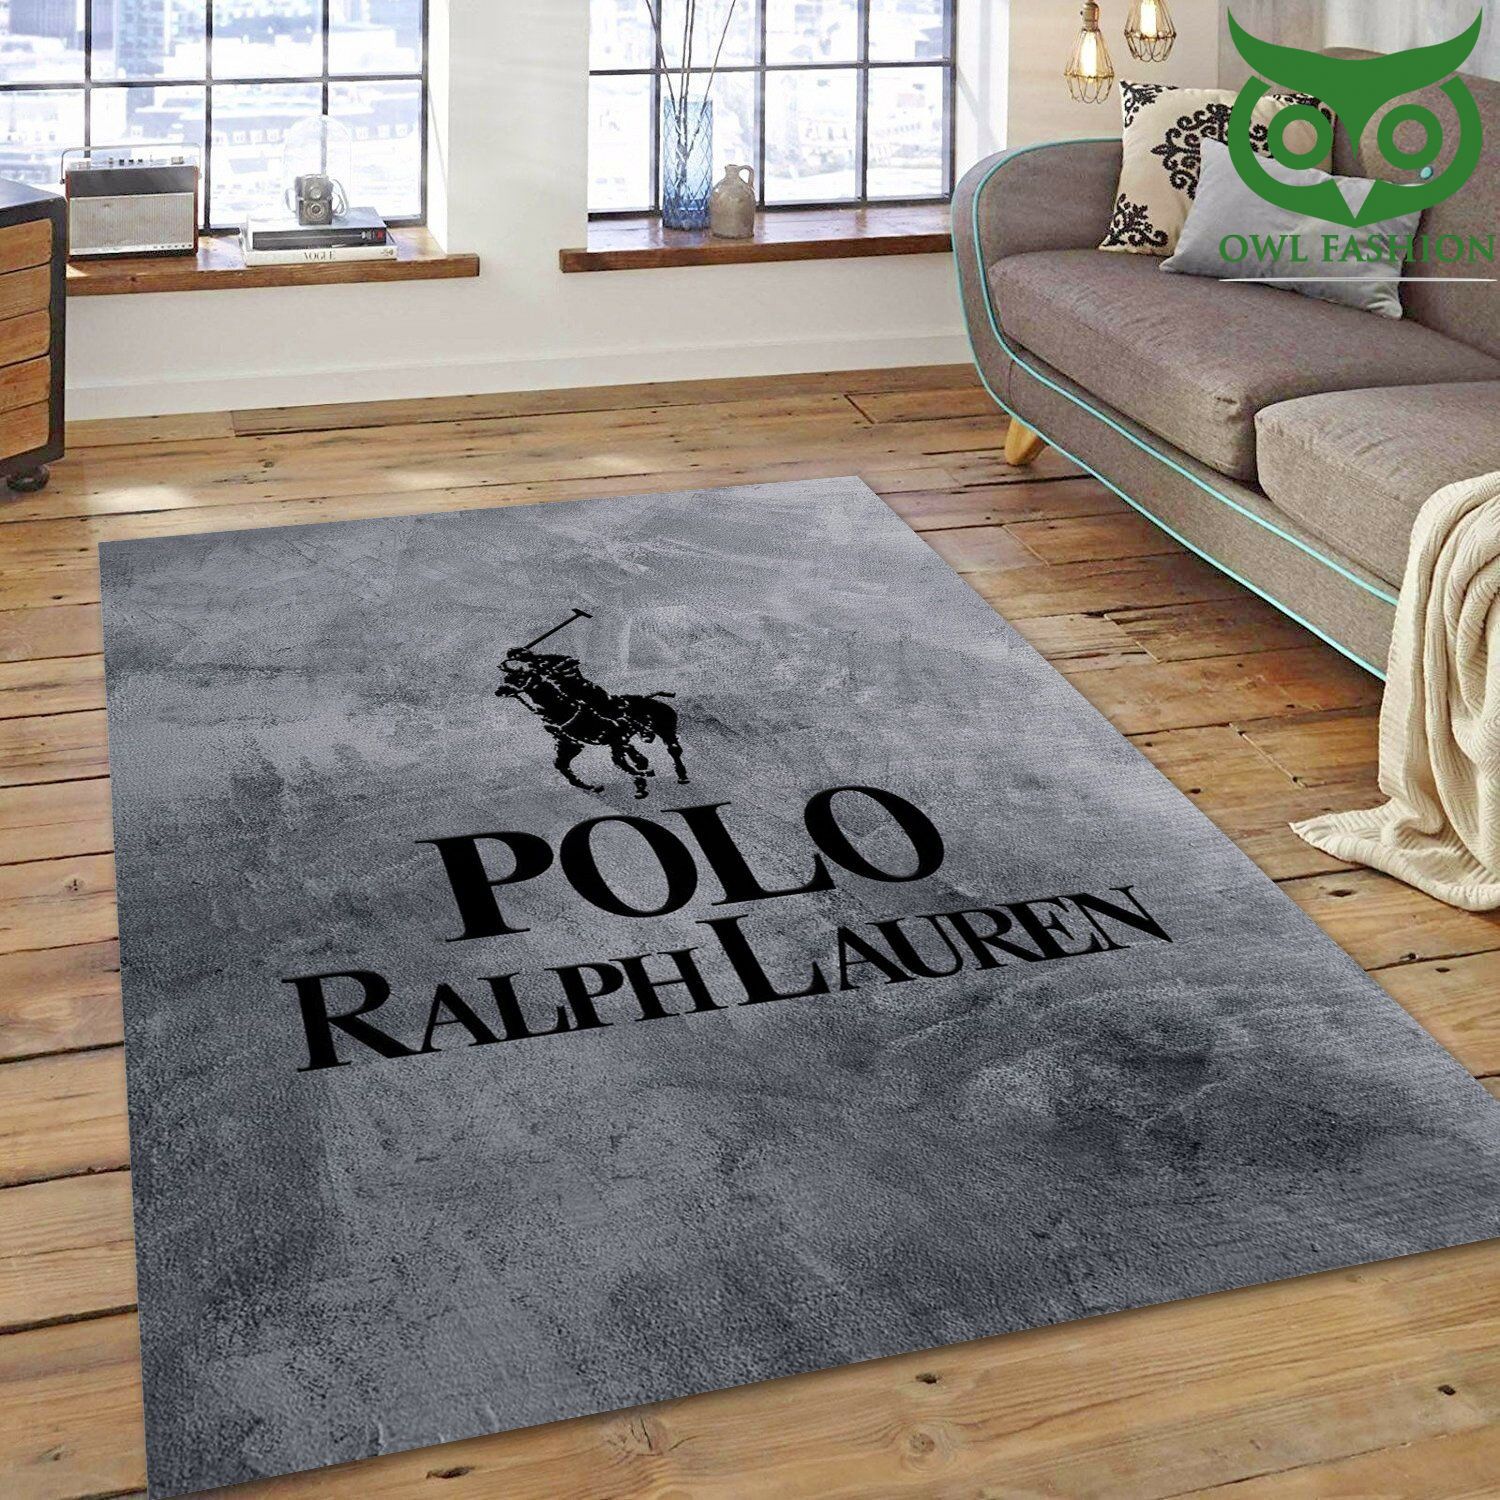 15 Polo Ralph Laurent Fashion Brand Carpet Rug